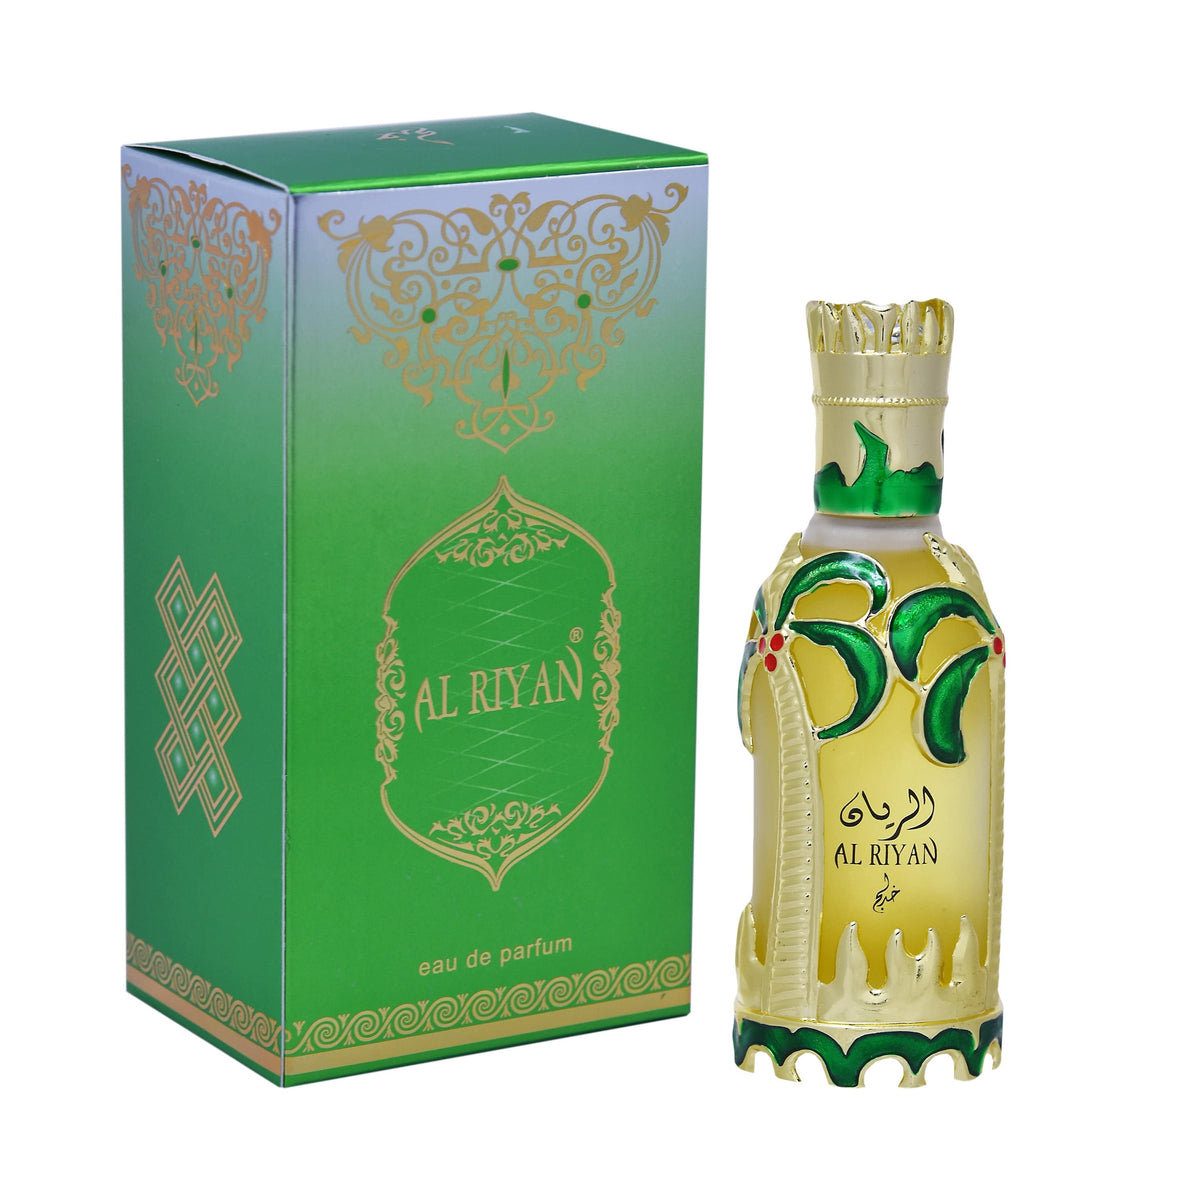 Al Riyan Perfume Oil - 17 ML by Khadlaj - Intense oud